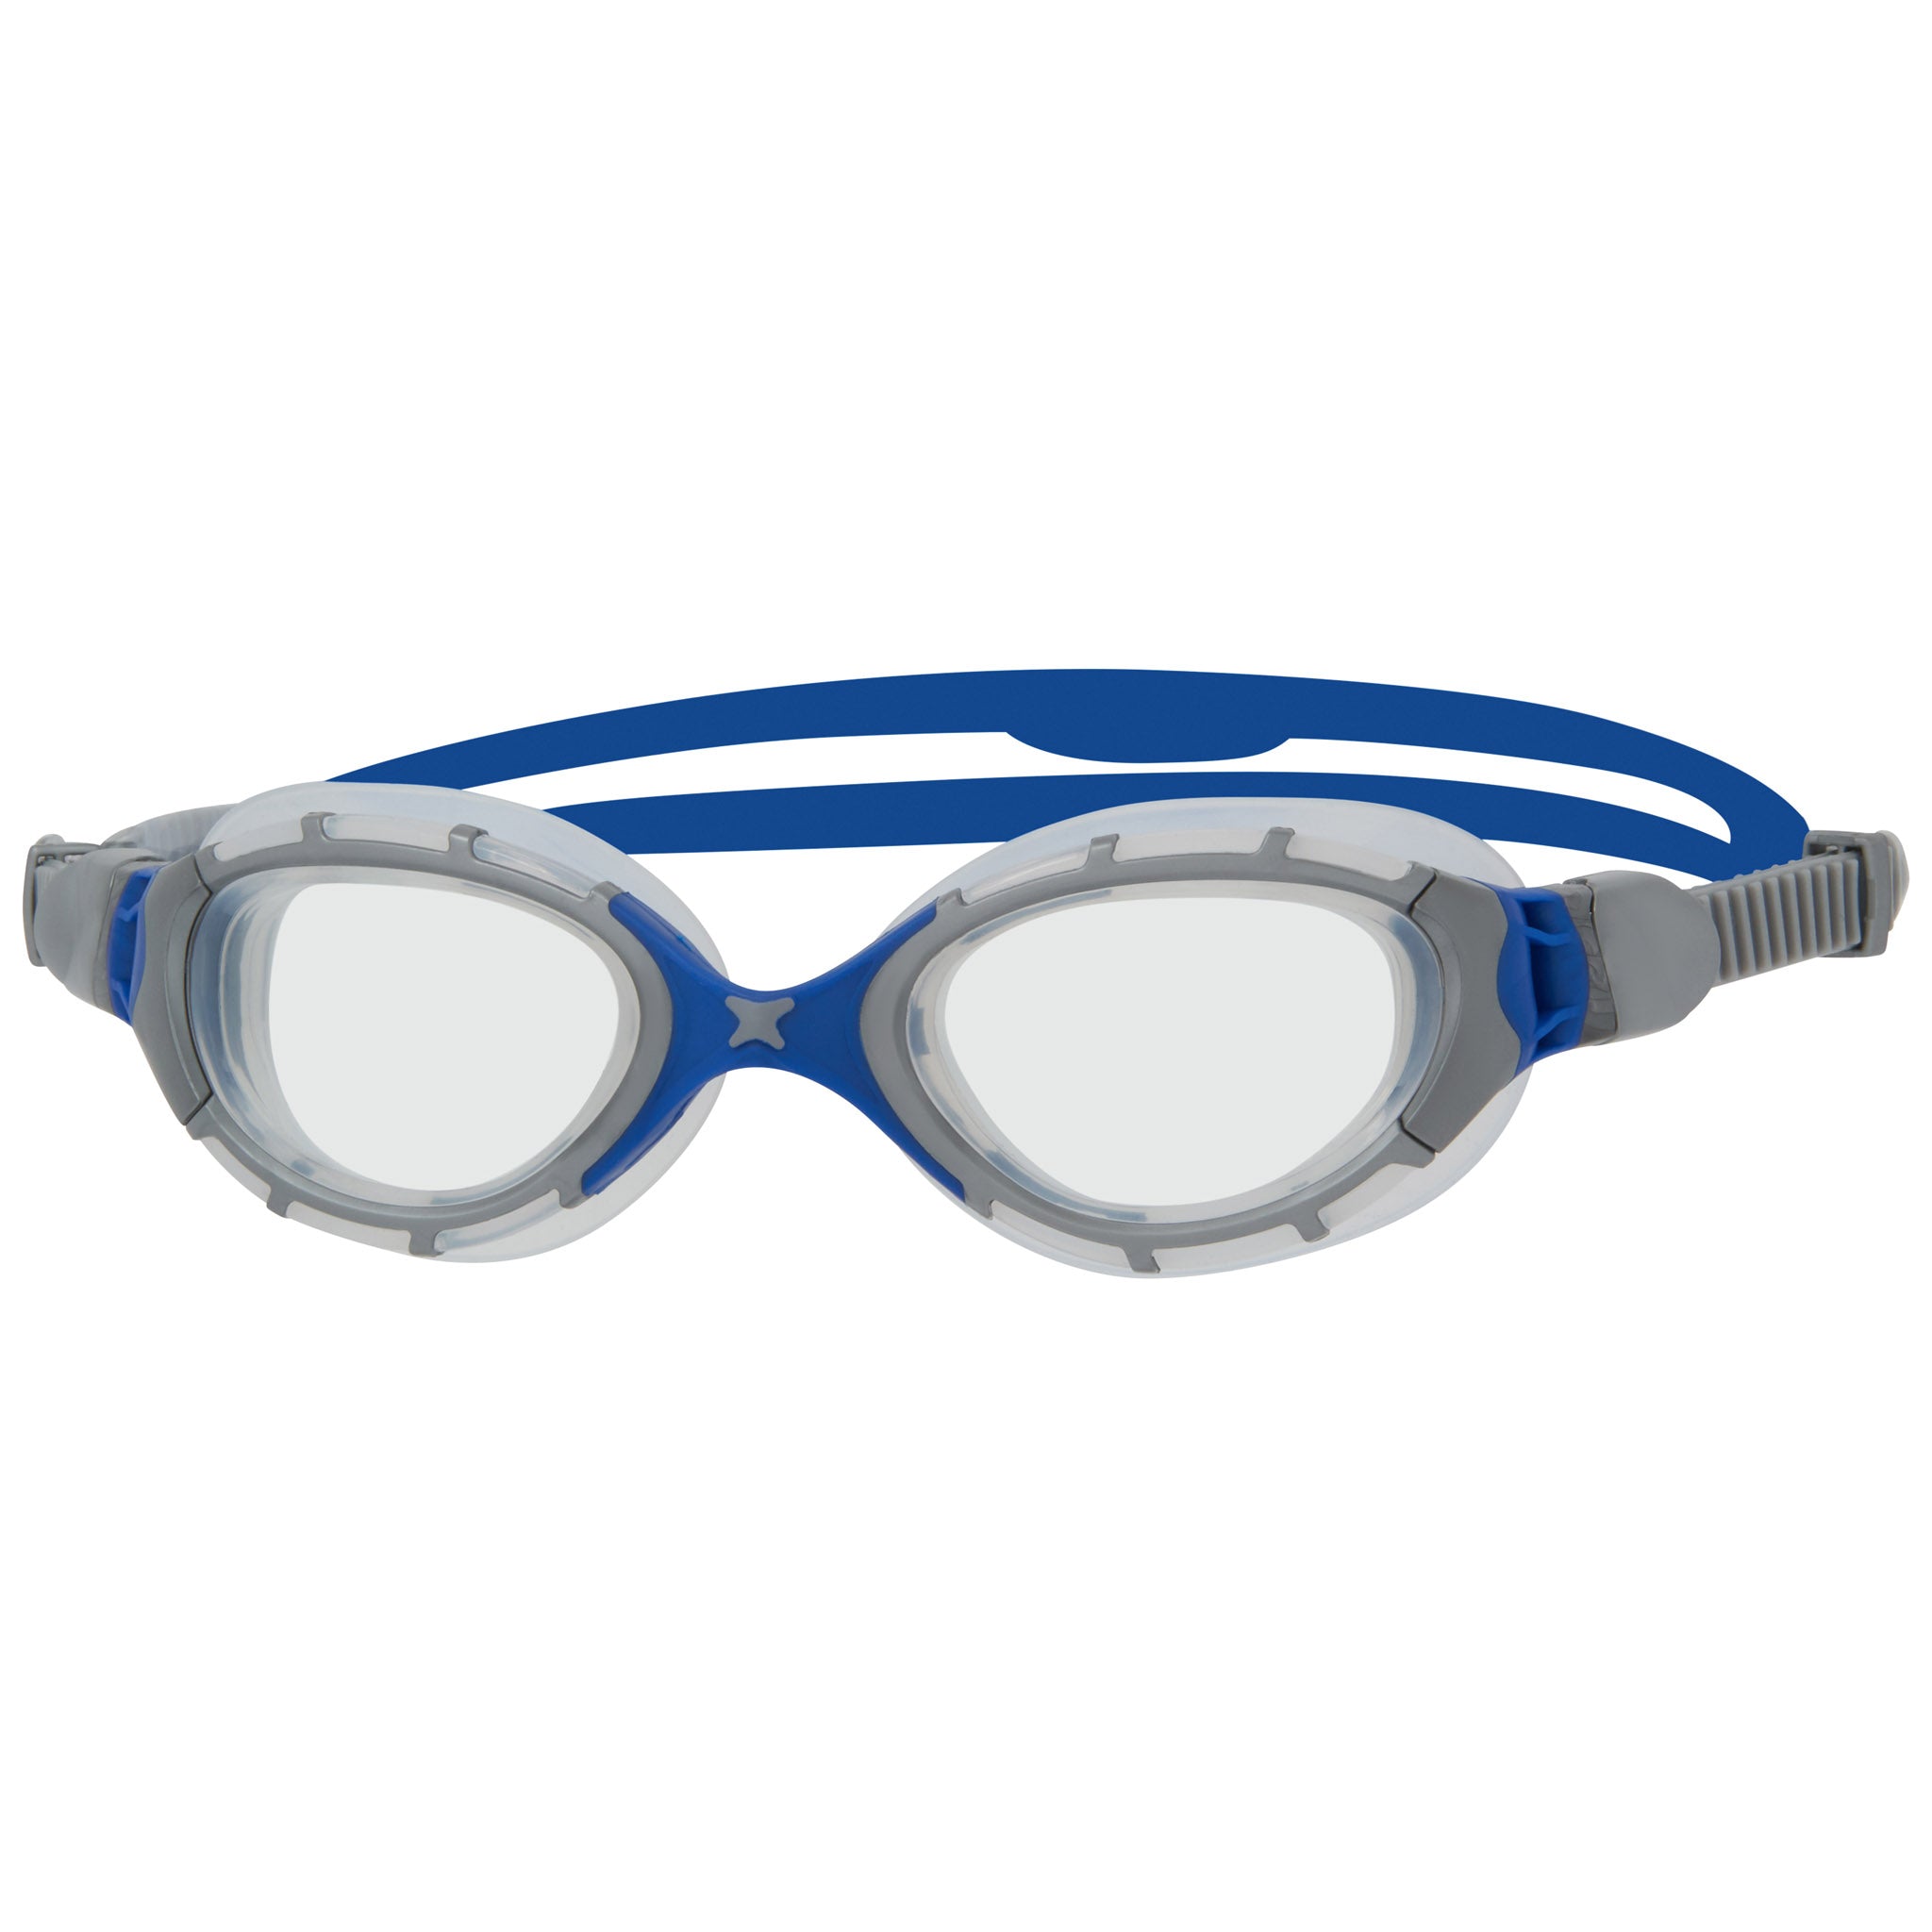 Zoggs Predator Flex Regular Profile Fit - Grey/Blue Clear Lens